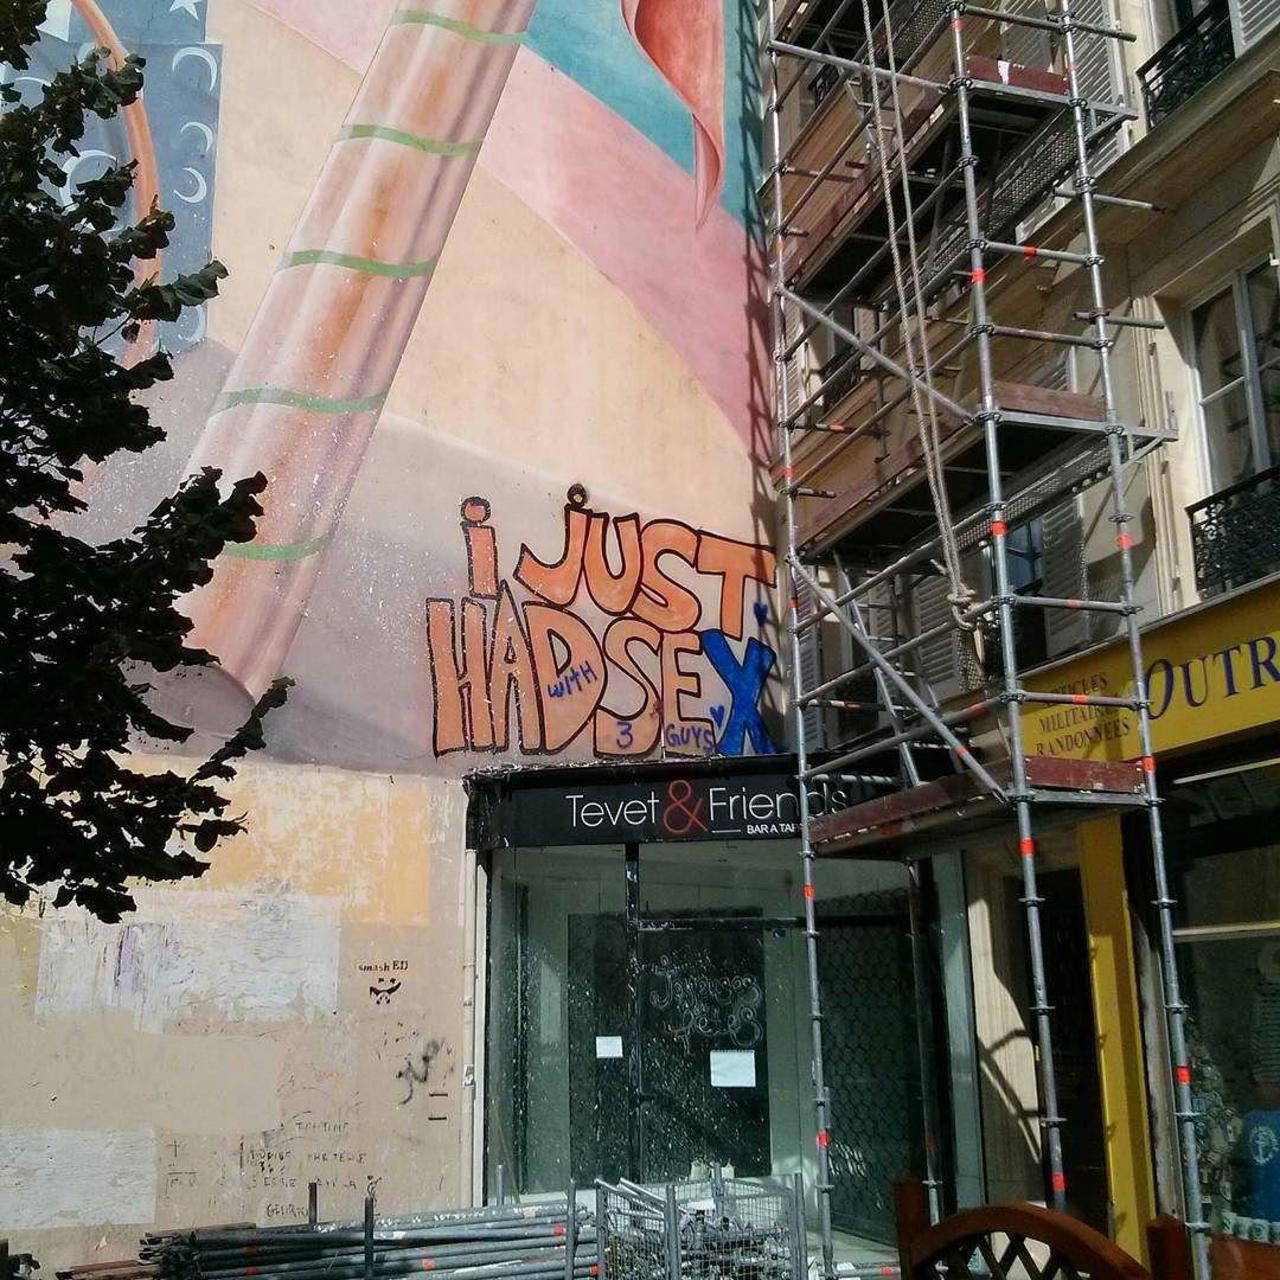 circumjacent_fr: #Paris #graffiti photo by francheetham http://ift.tt/1Mw6ez9 #StreetArt http://t.co/hDpIUoeB68